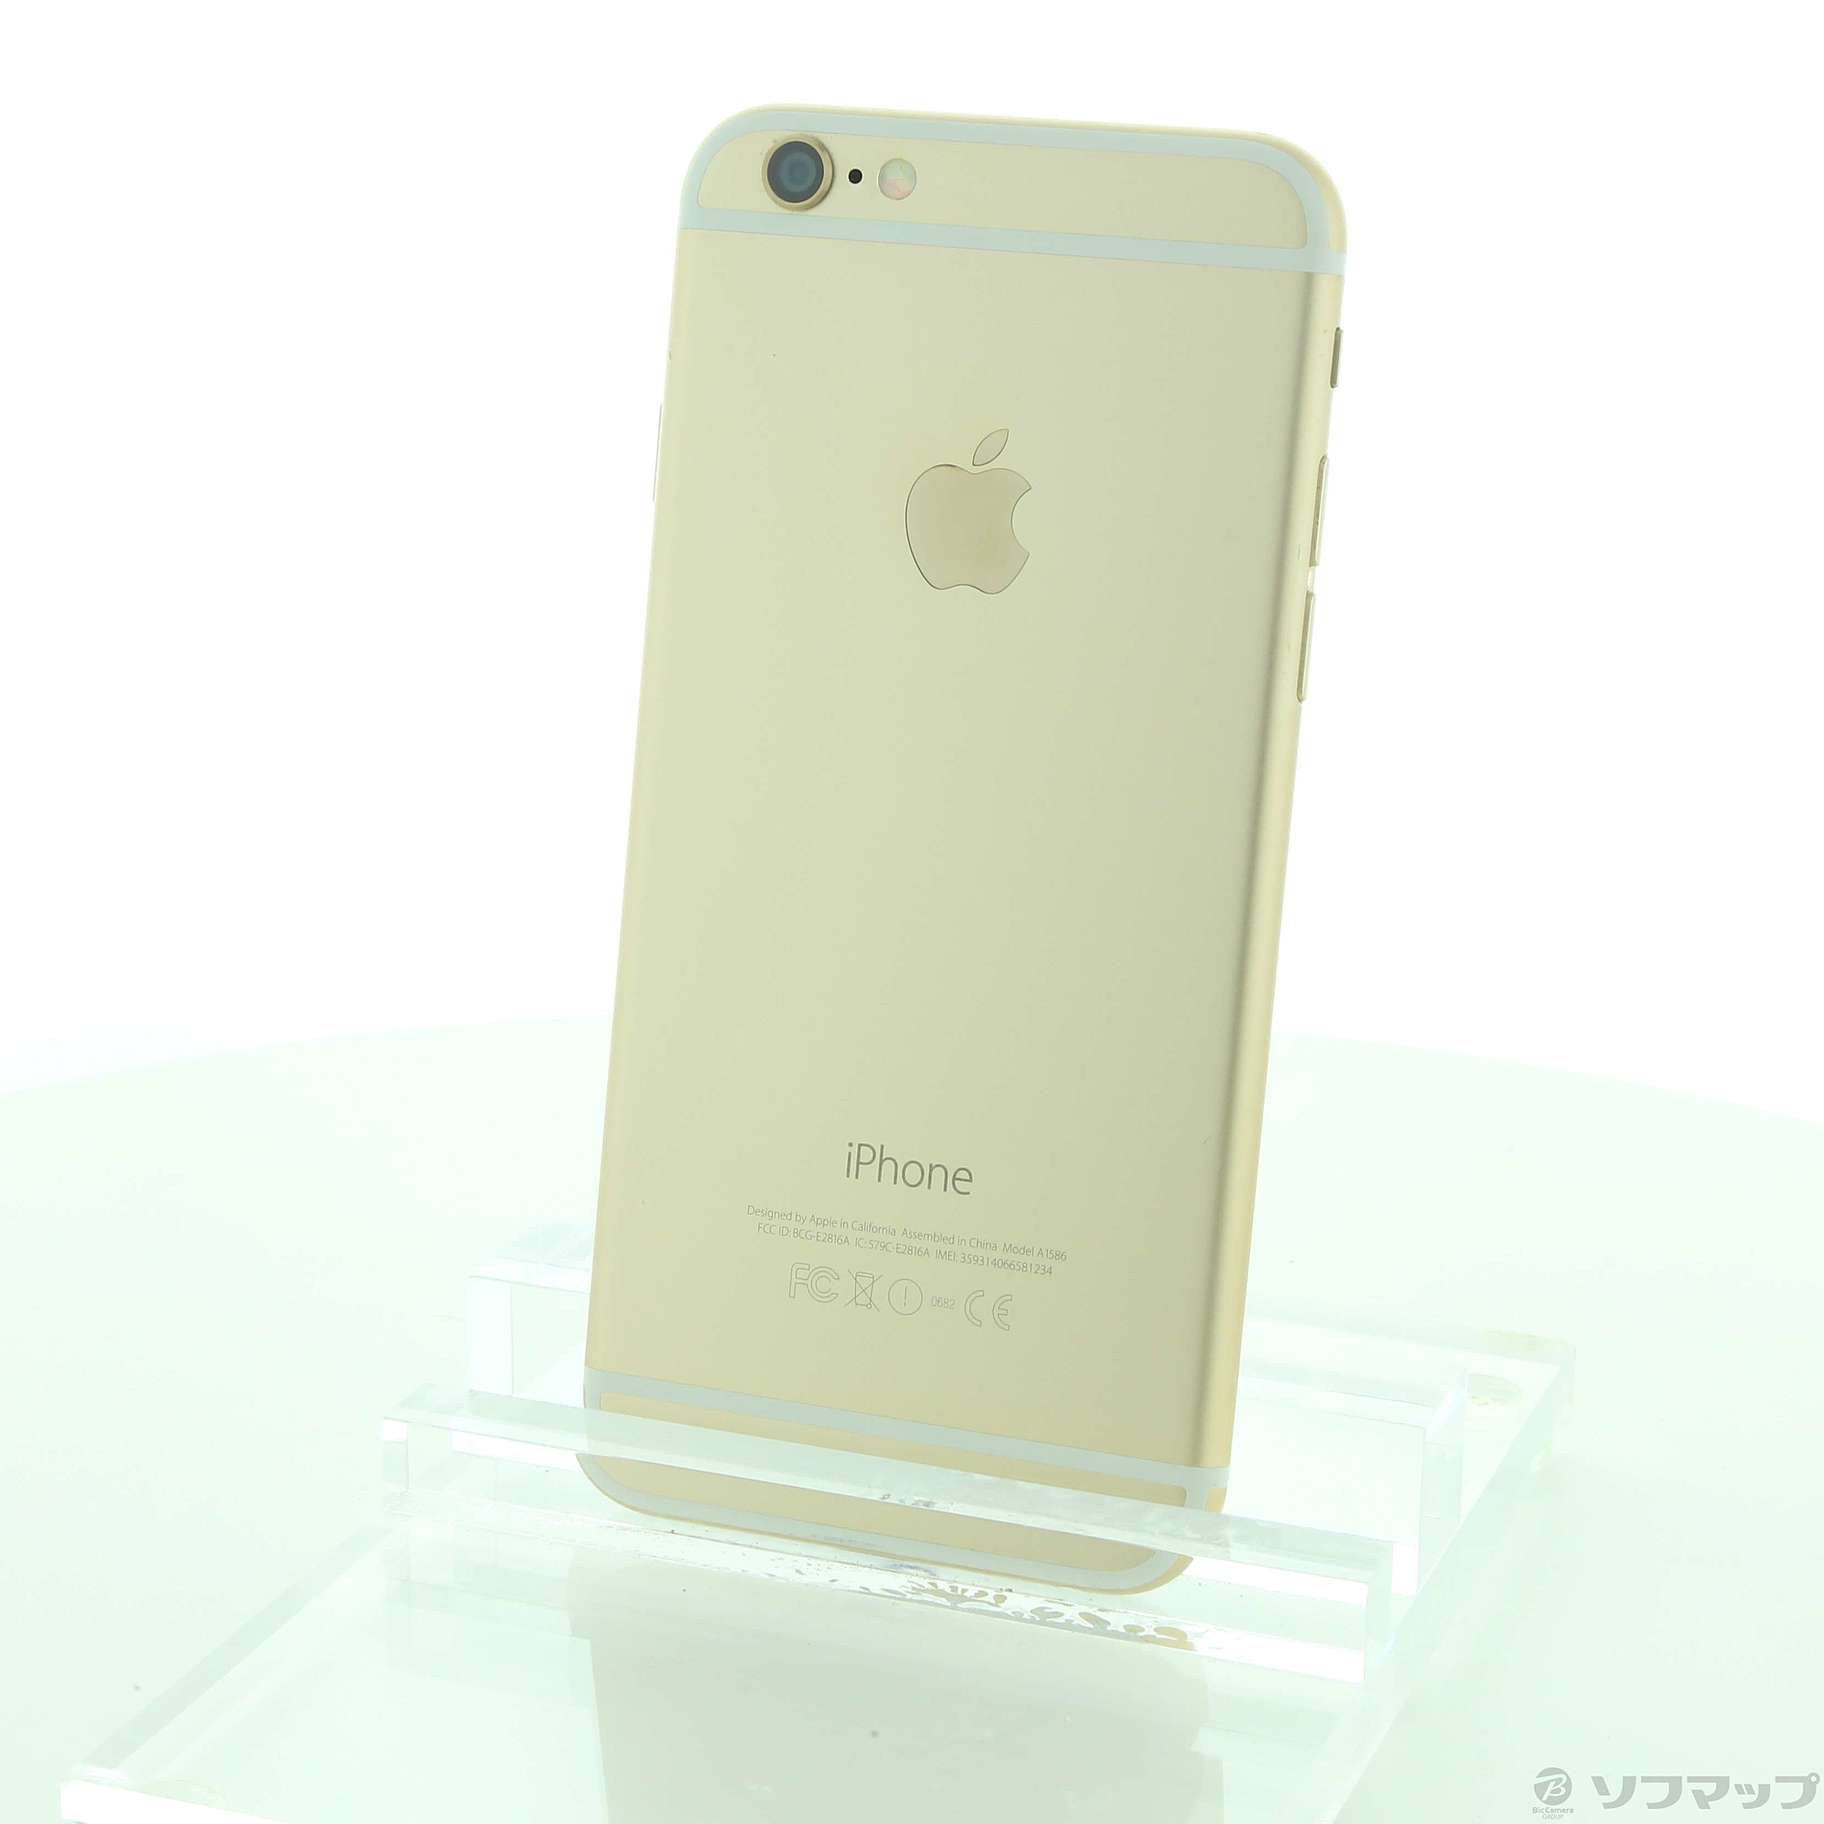 iPhone Gold 16 GB Softbank